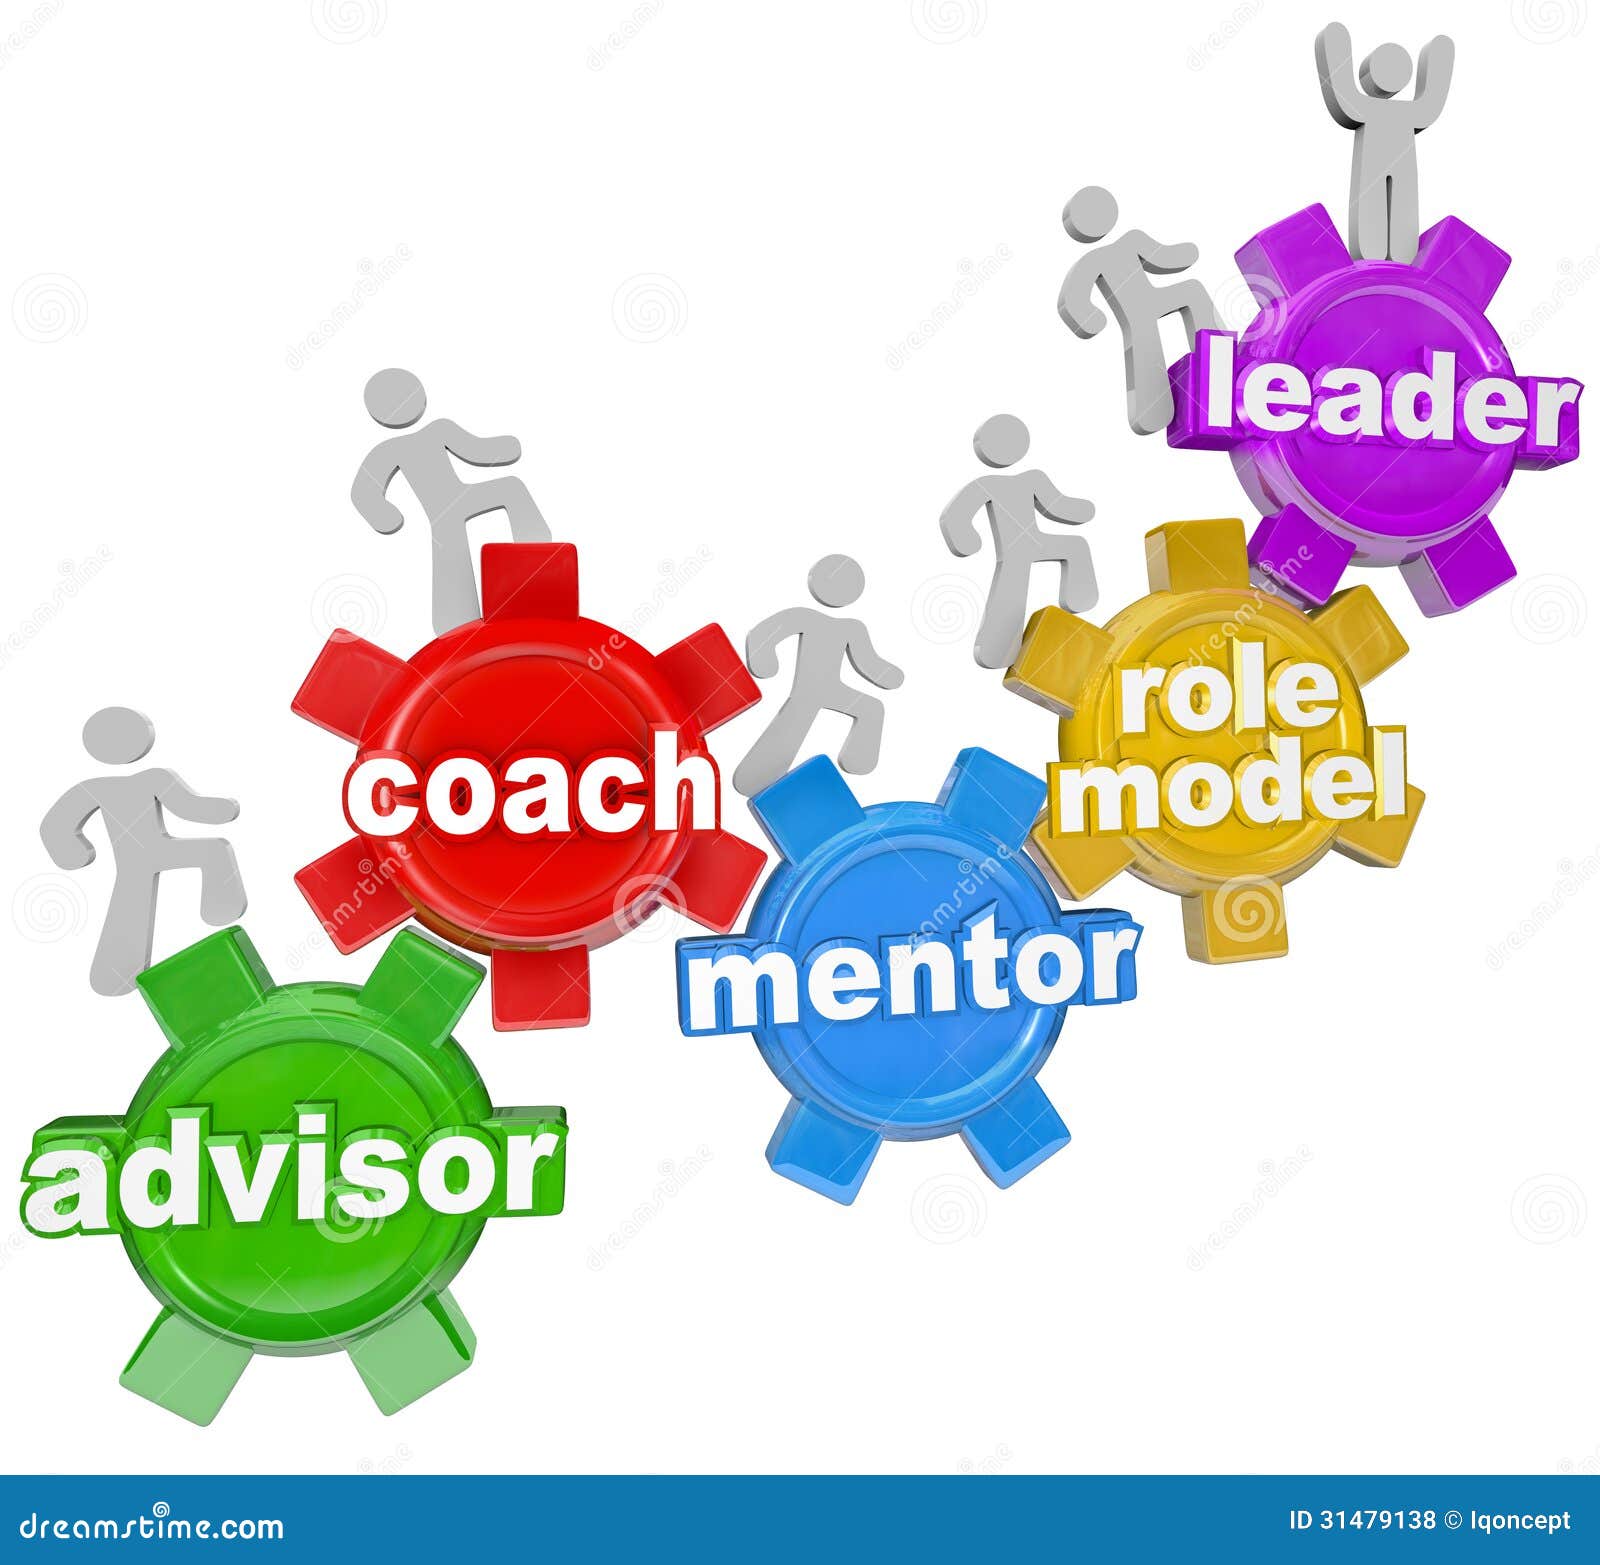 Advisor Mentor You To Achieve Goals Stock Illustration - Illustration of inspire, guide: